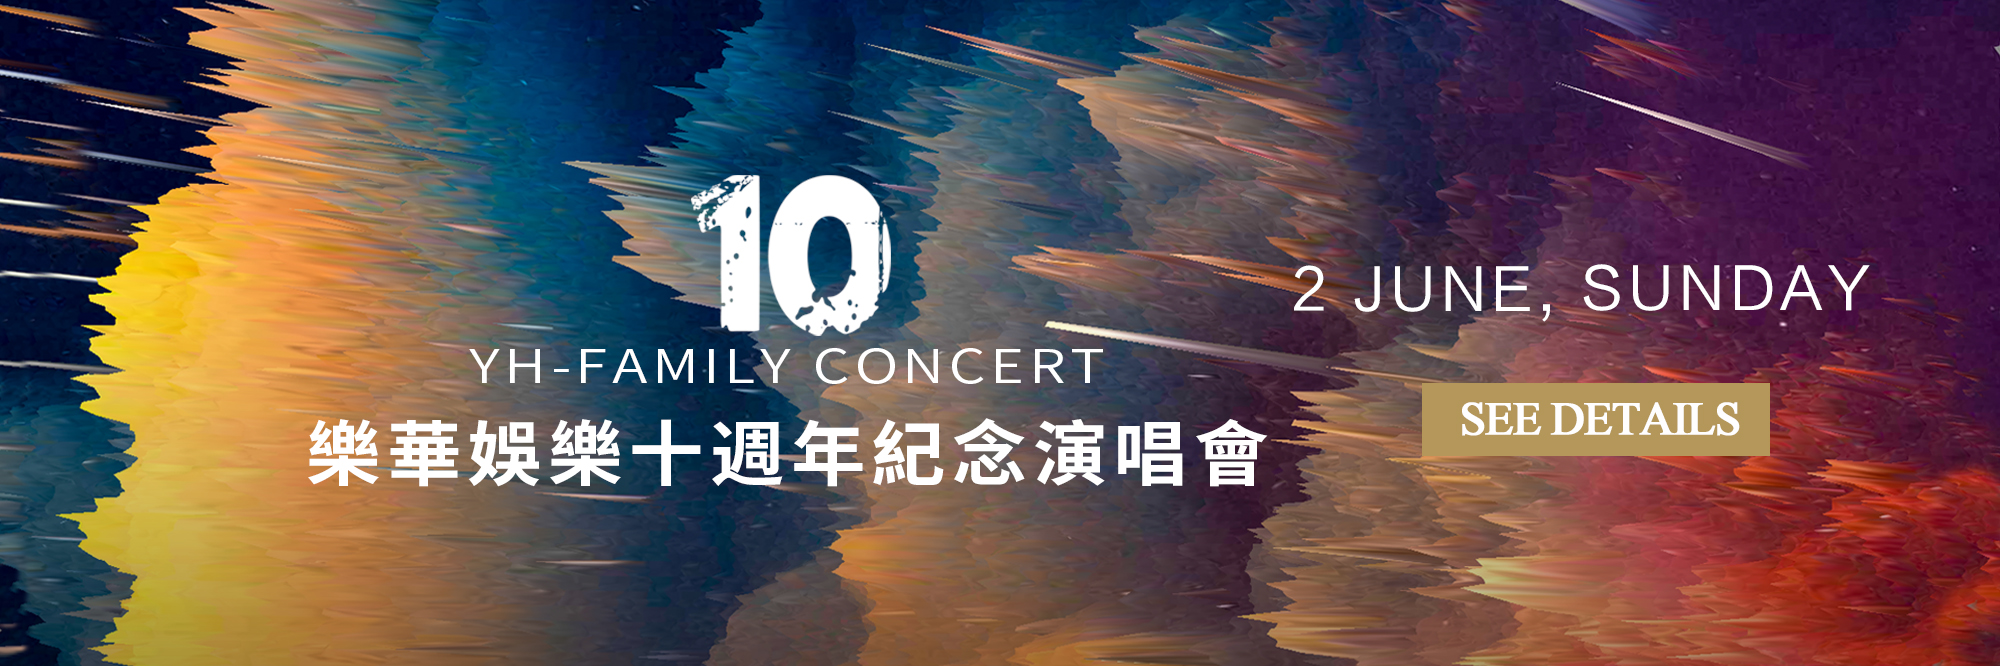 Shows & Concerts in Macau Macau Entertainment The Macao